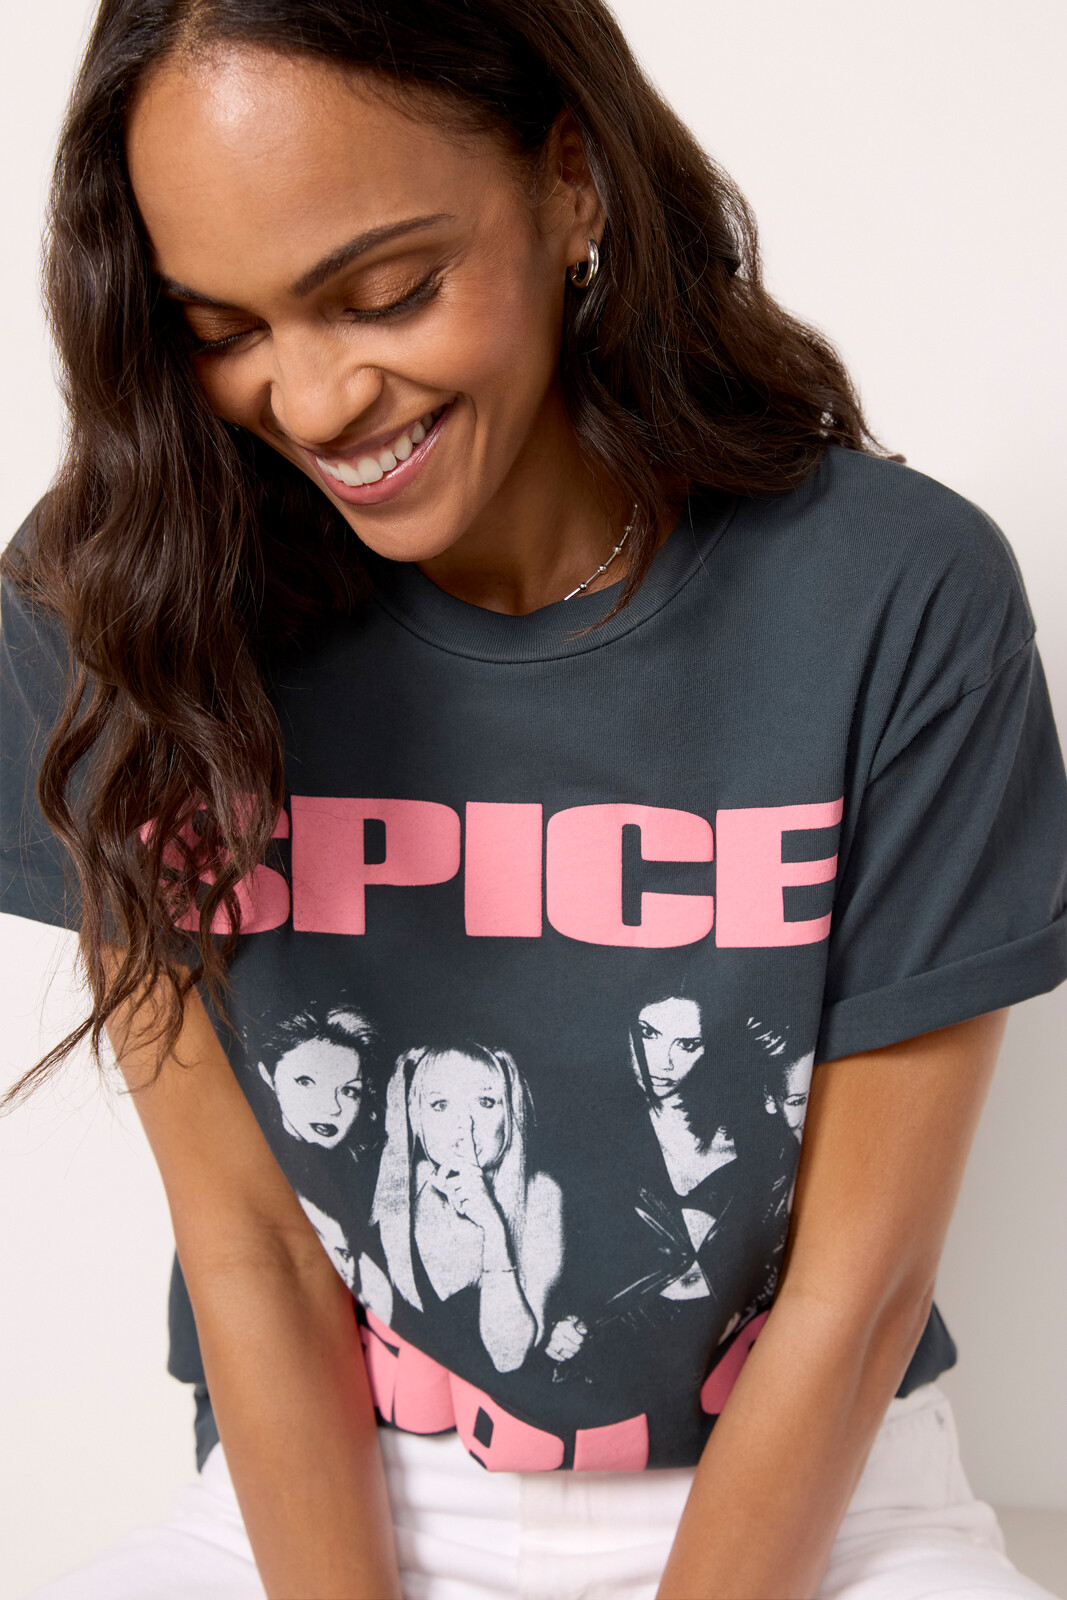 Spice Girls Photo Tee